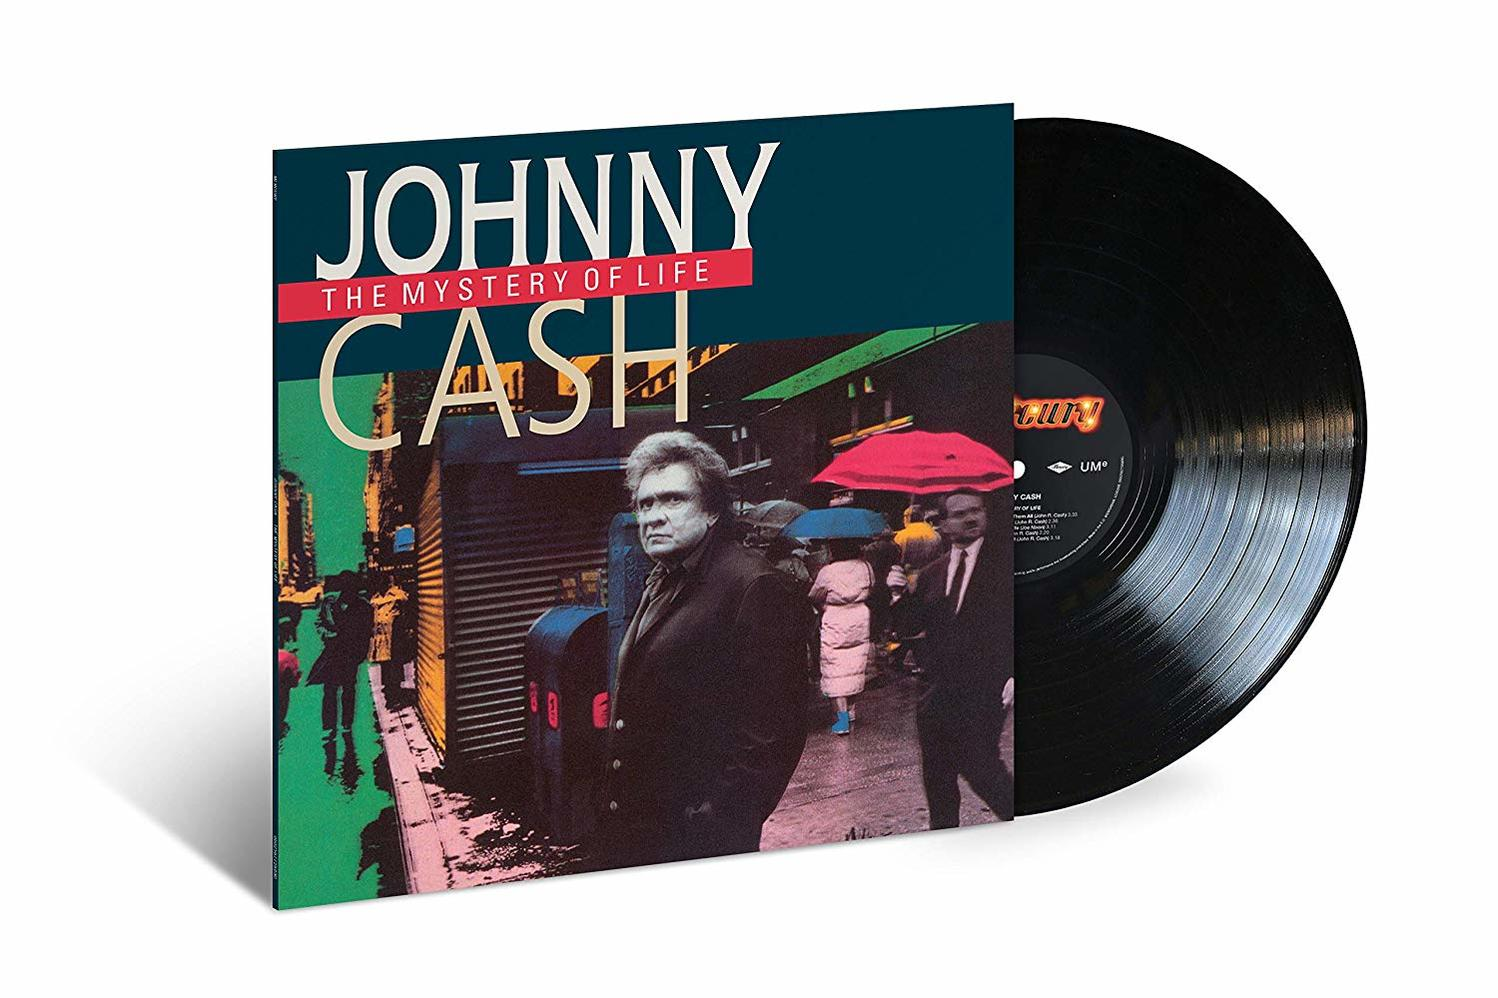 (Vinyl) OF THE VINYL) LIFE - Johnny (REMASTERED MYSTERY - Cash